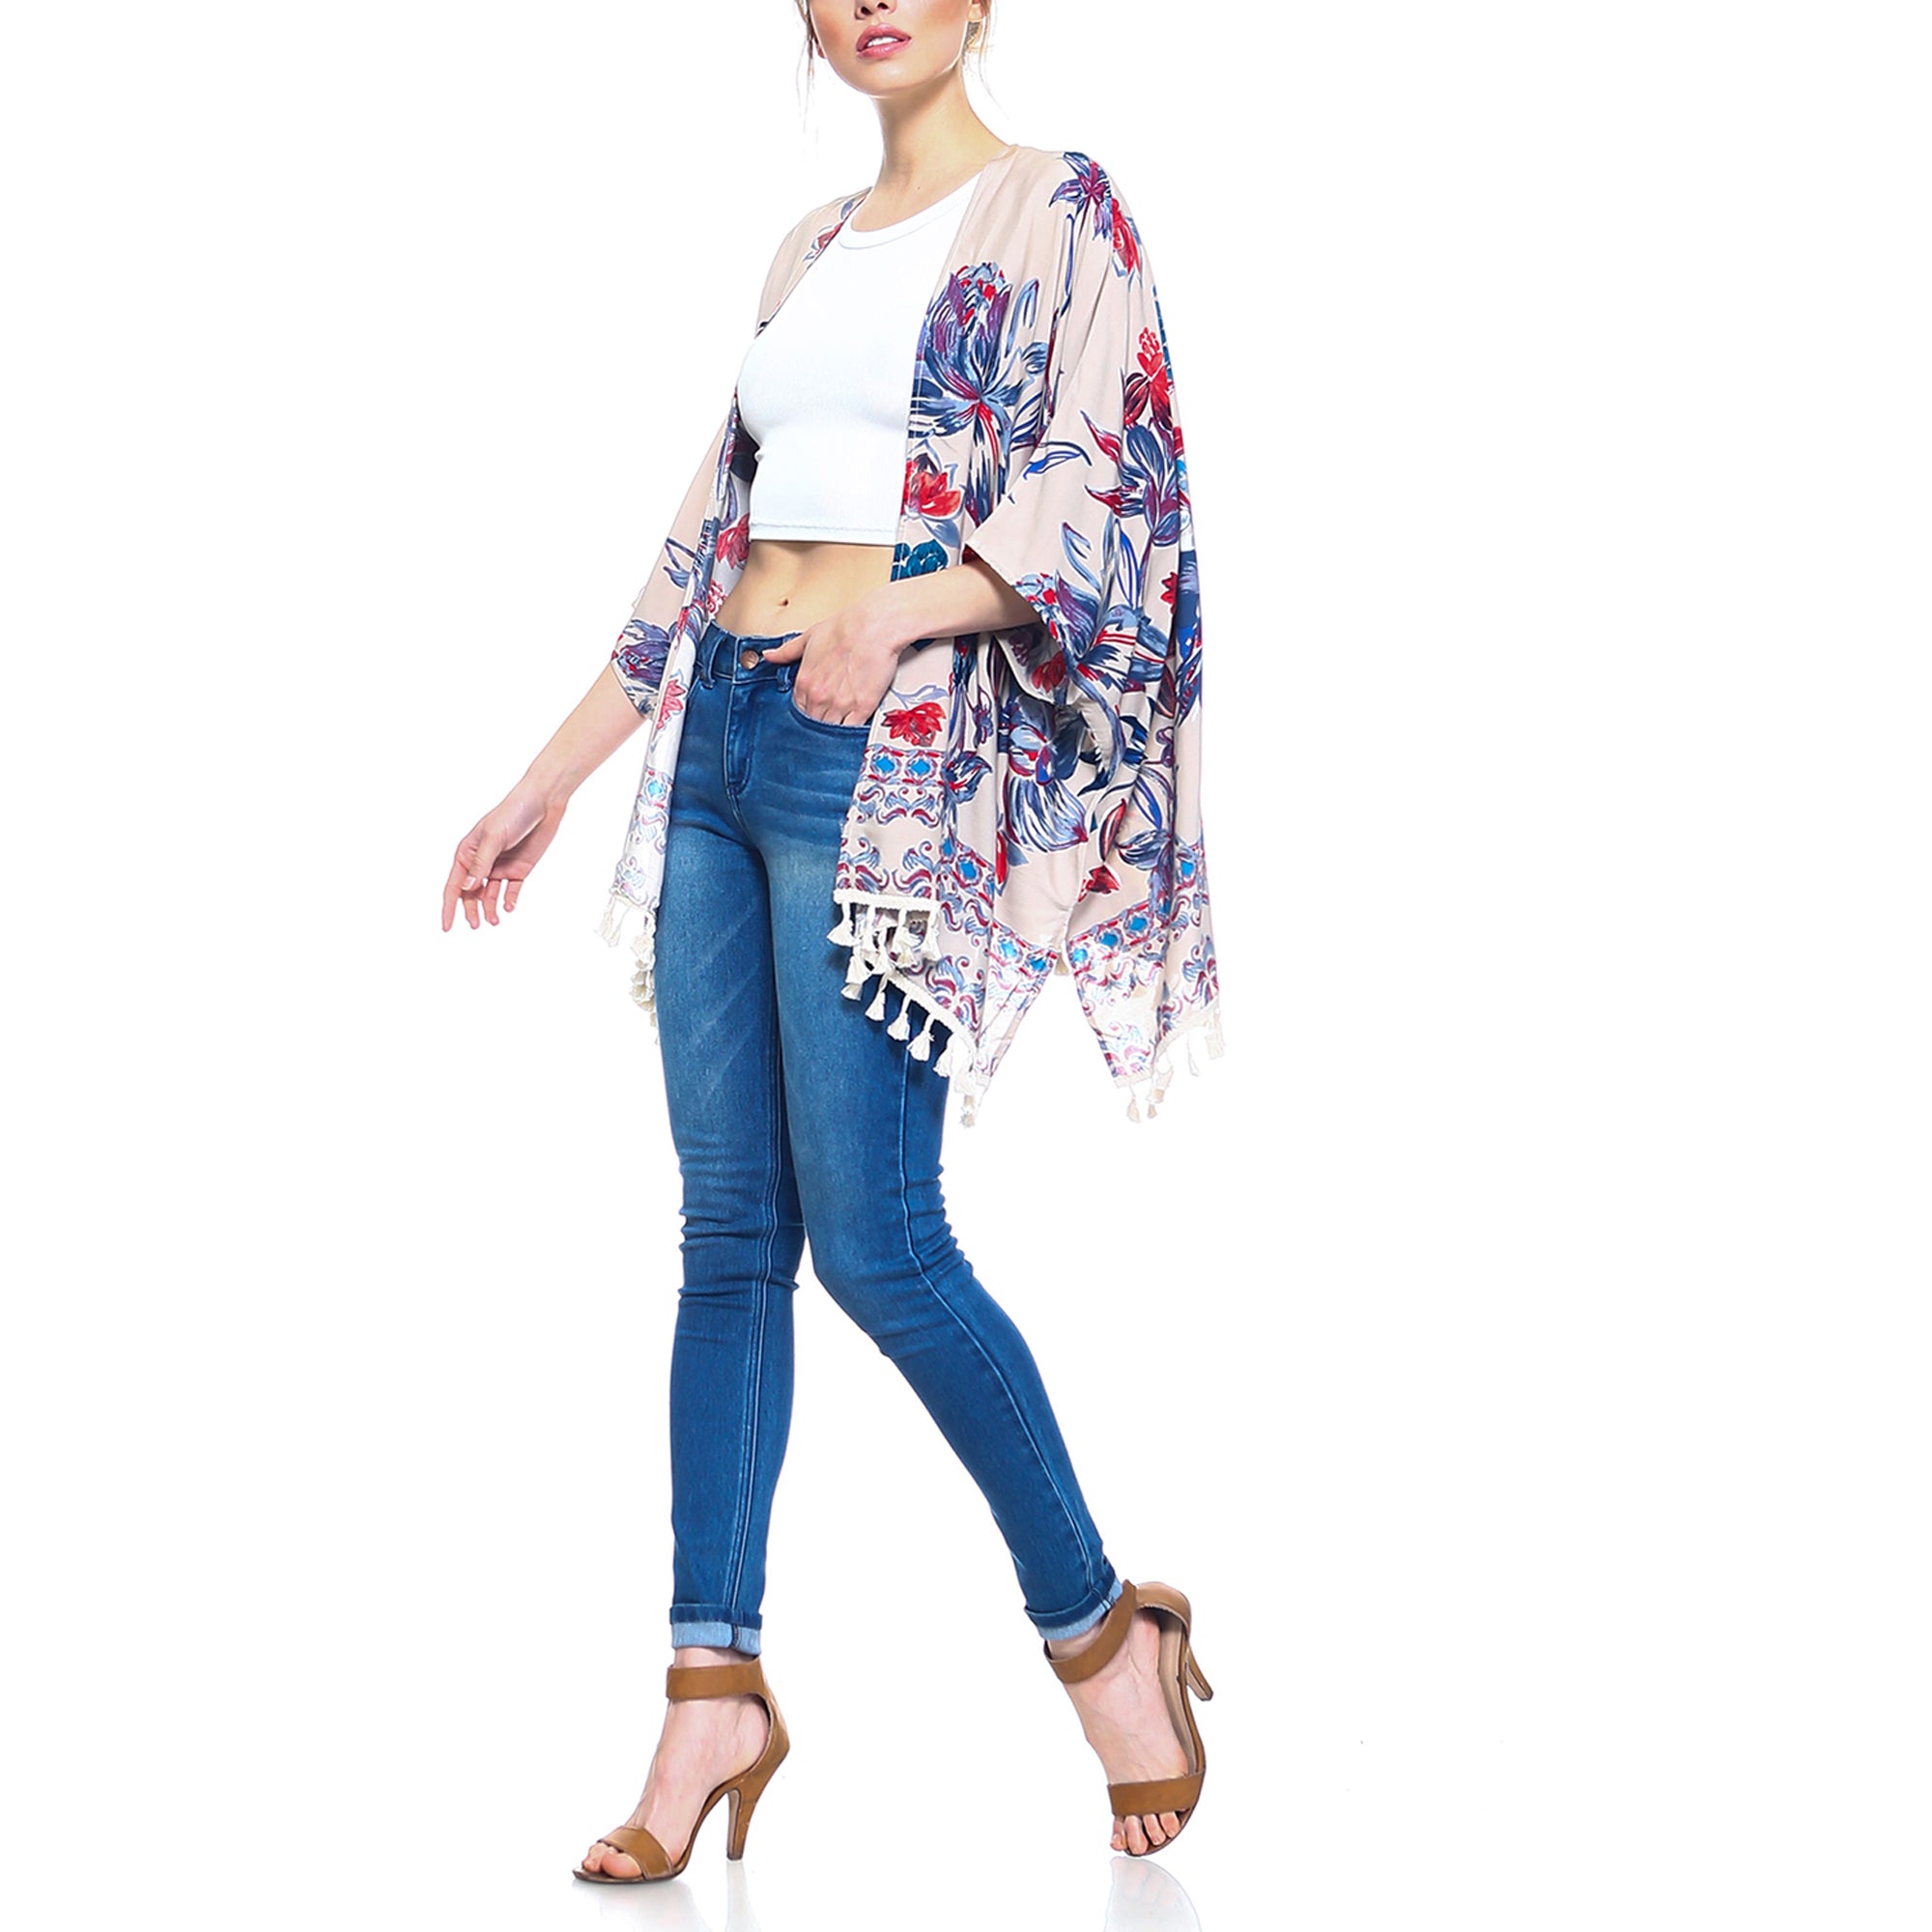 Fashionazzle Women's Casual Fringe Kimono Cardigan Beach Wear Cover-up